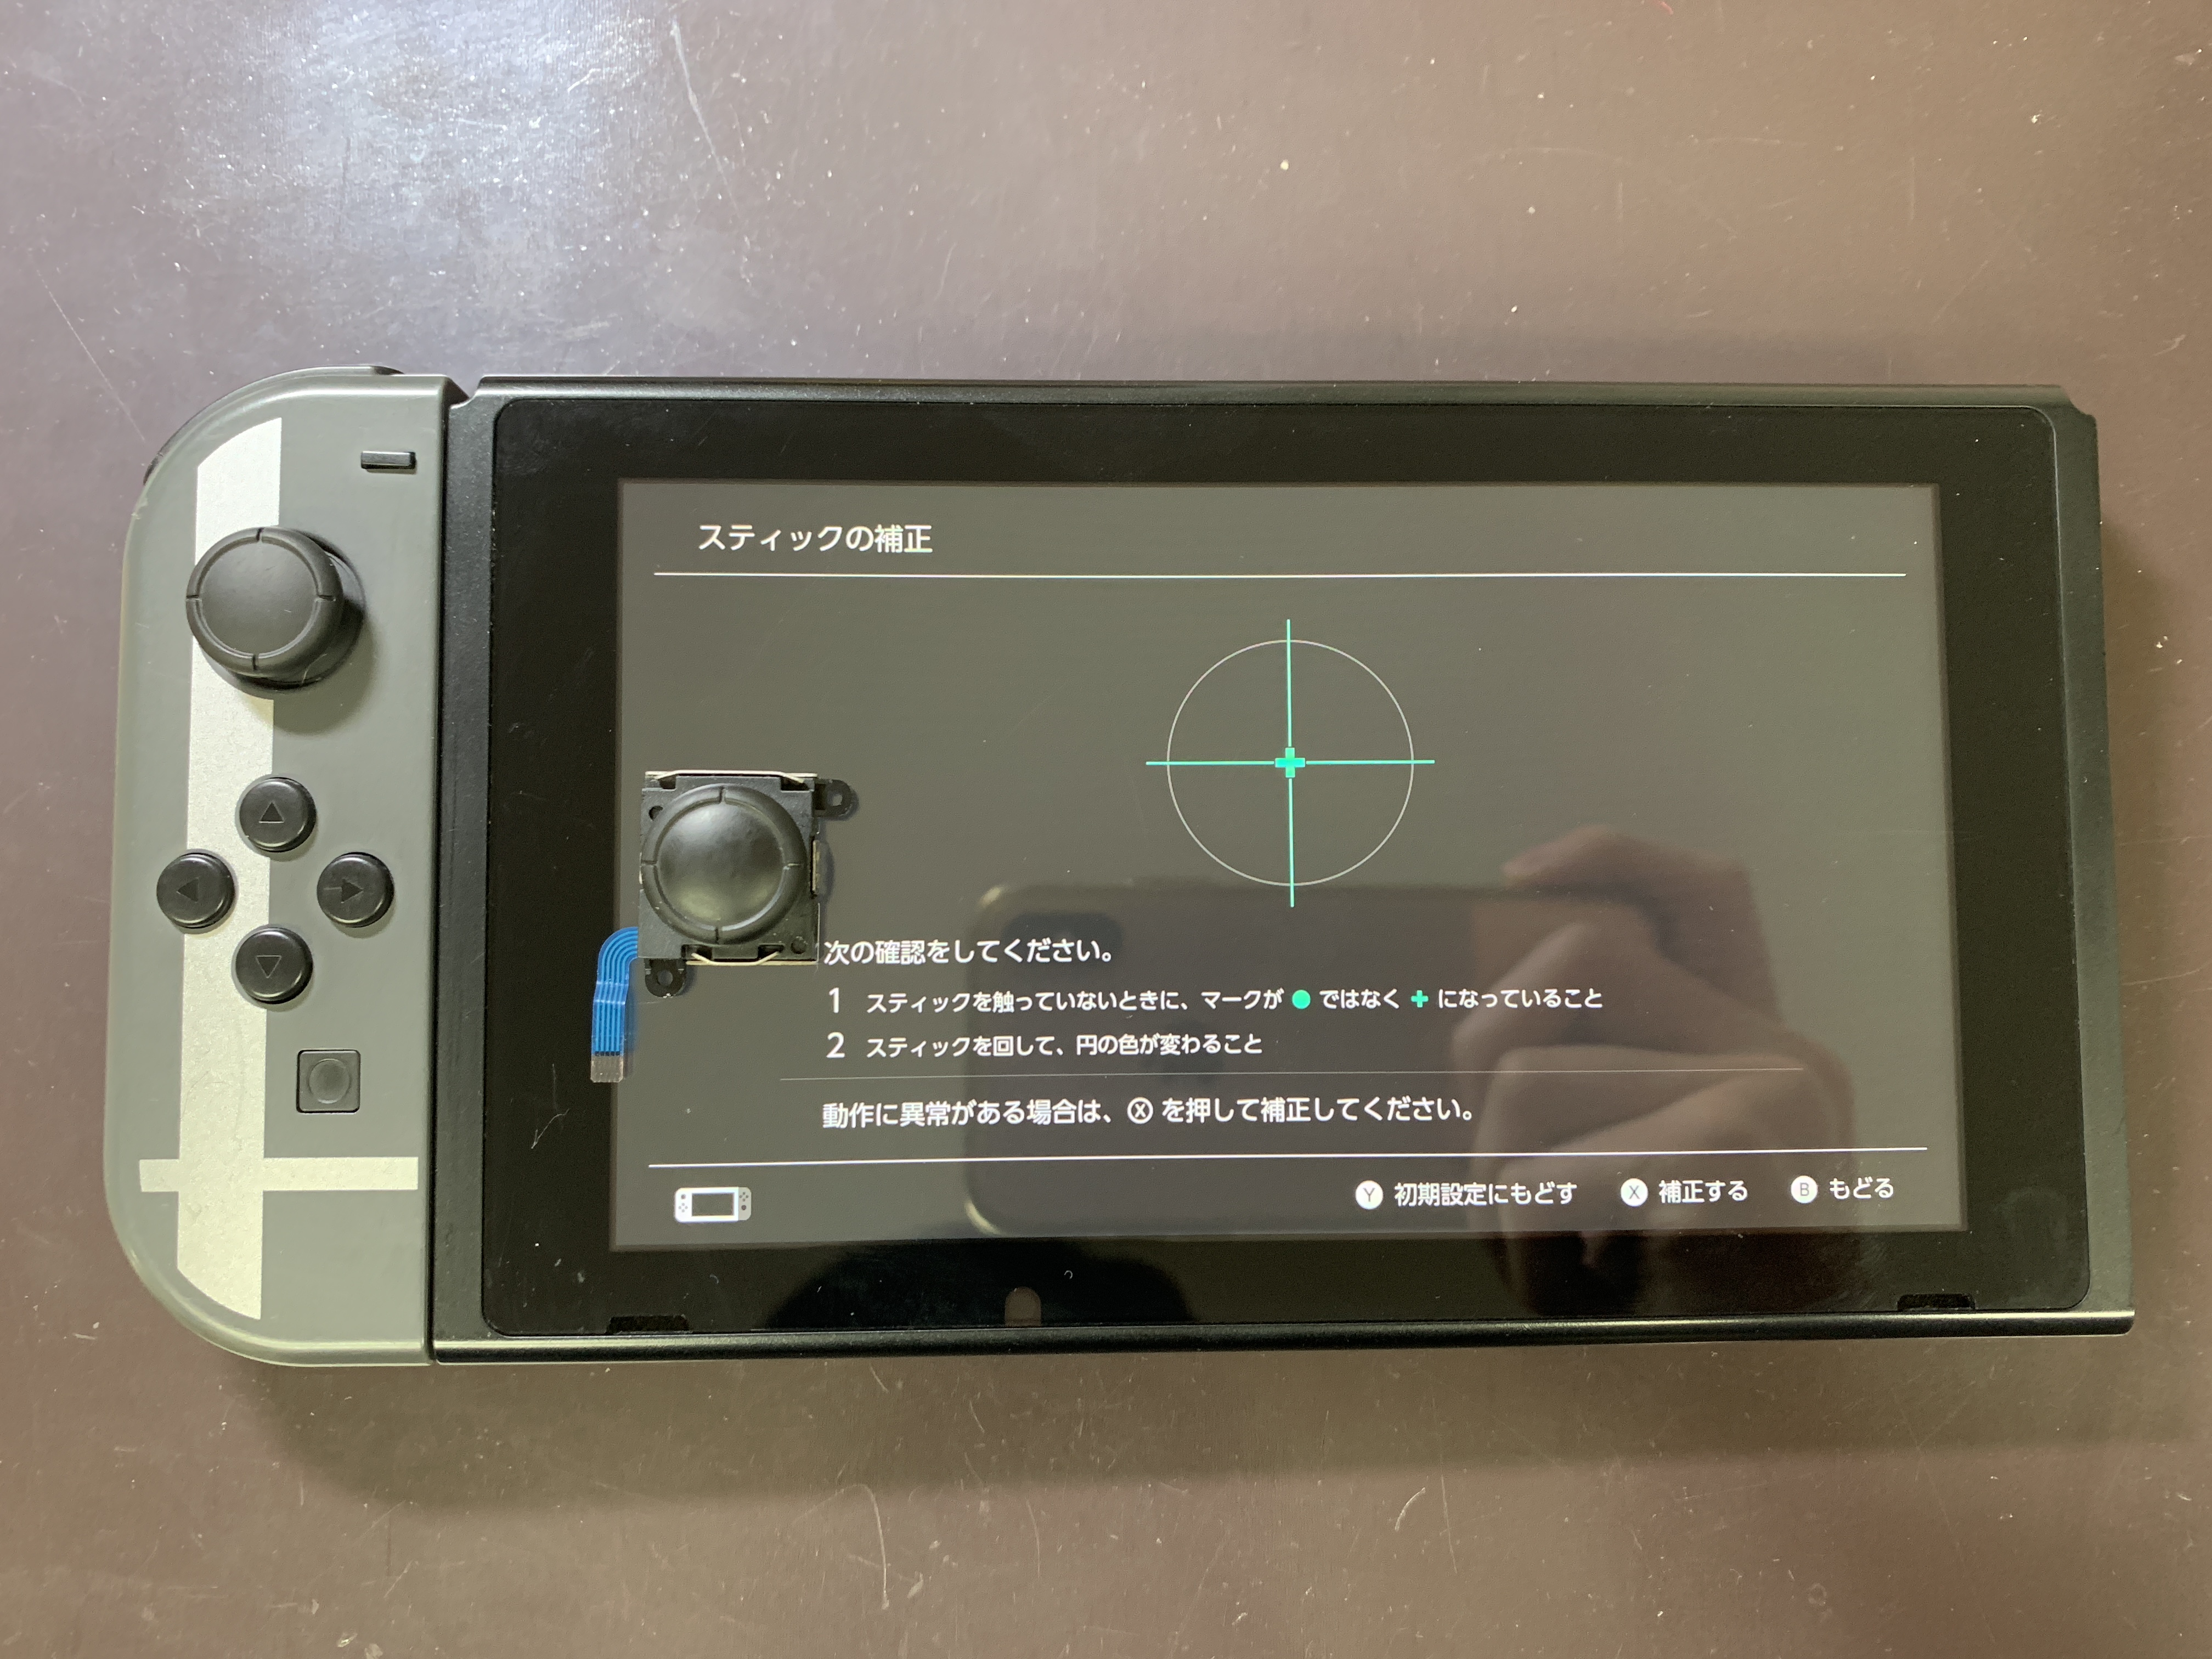 Joy-Con(L) 中心からずれてしまうアナログスティックの修理をご依頼いただきました！ Switch・Nintendo3DS ・ PSP  修理のゲームホスピタル |Switch Nintendo3DS(ニンテンドーDS) PSP 修理